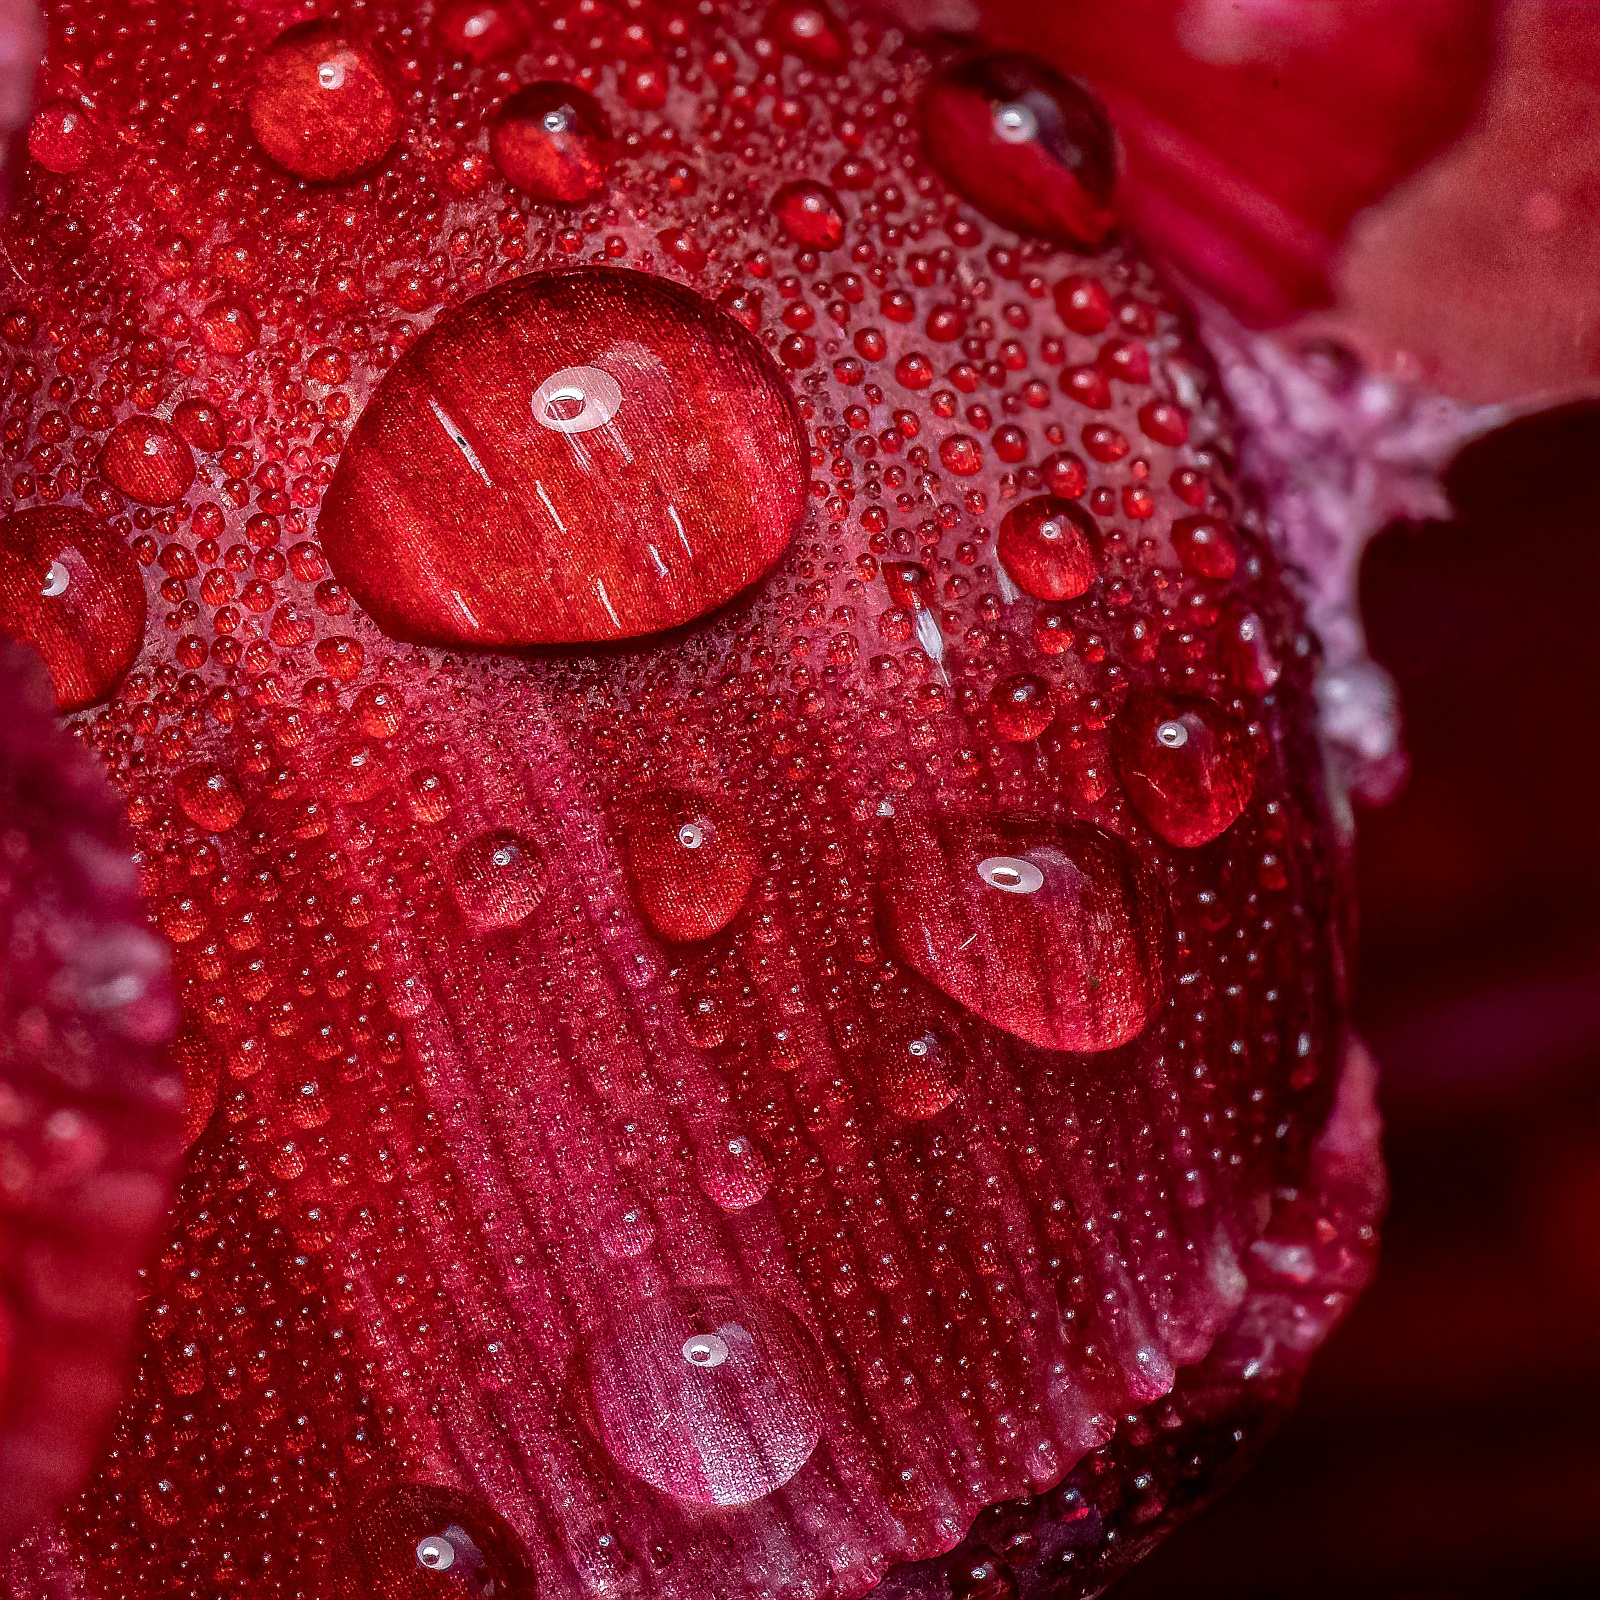 Tulpe nach dem Regen - Makroaufnahmen